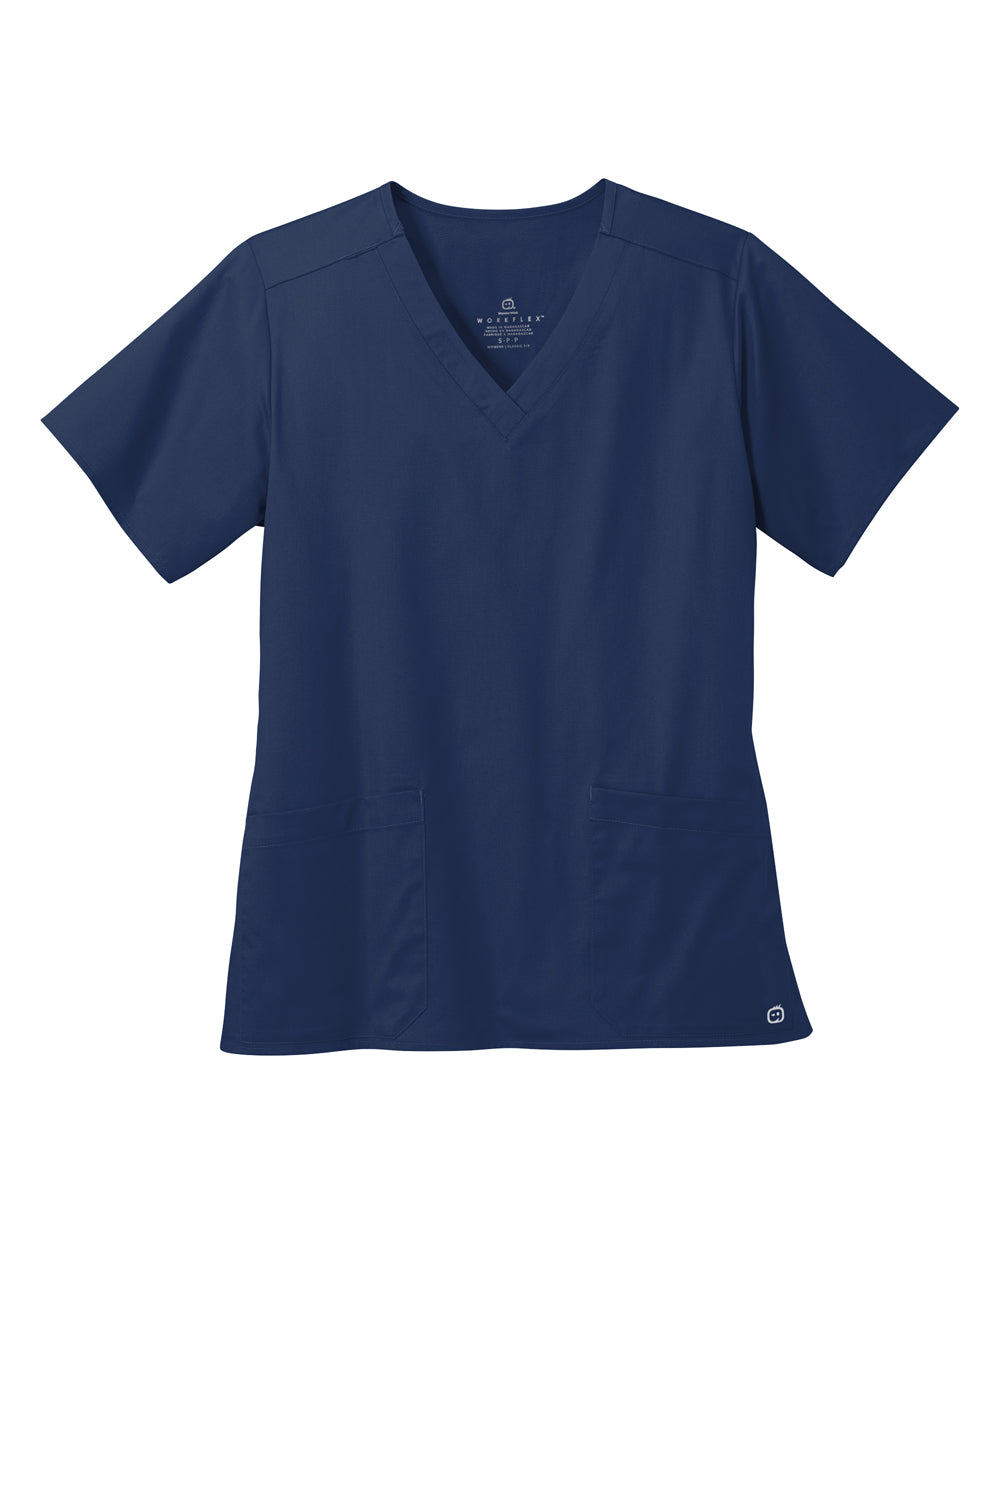 Wonderwink WW4560 WorkFlex Short Sleeve V-Neck Shirt Navy Blue Flat Front